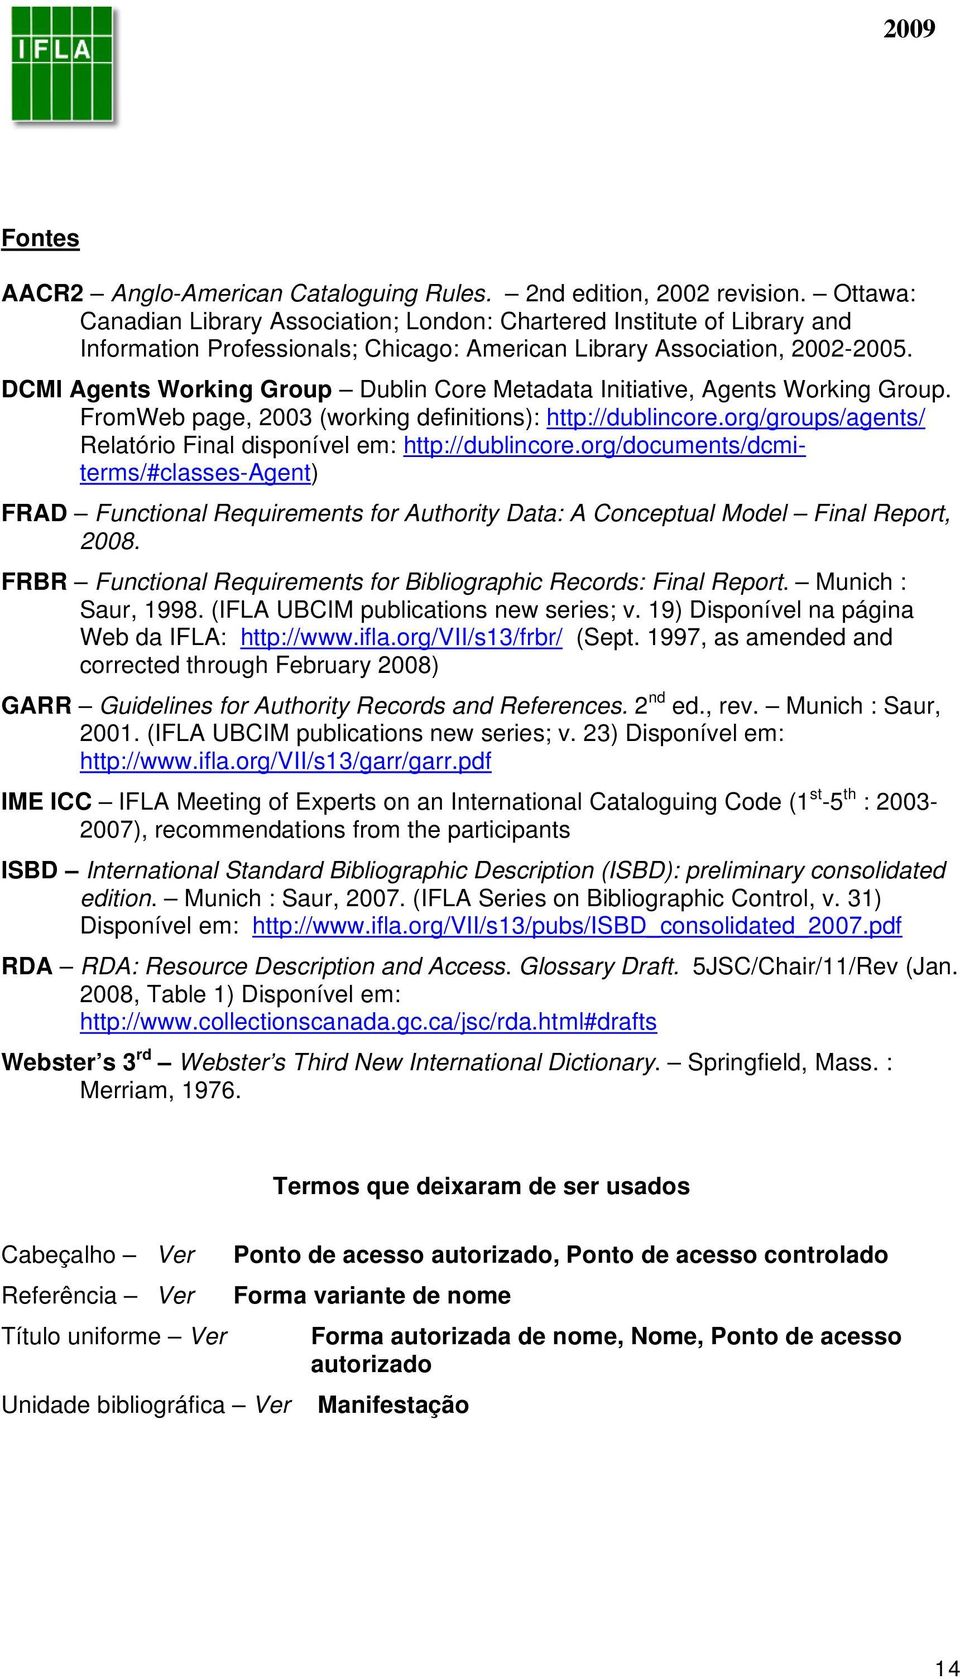 DCMI Agents Working Group Dublin Core Metadata Initiative, Agents Working Group. FromWeb page, 2003 (working definitions): http://dublincore.